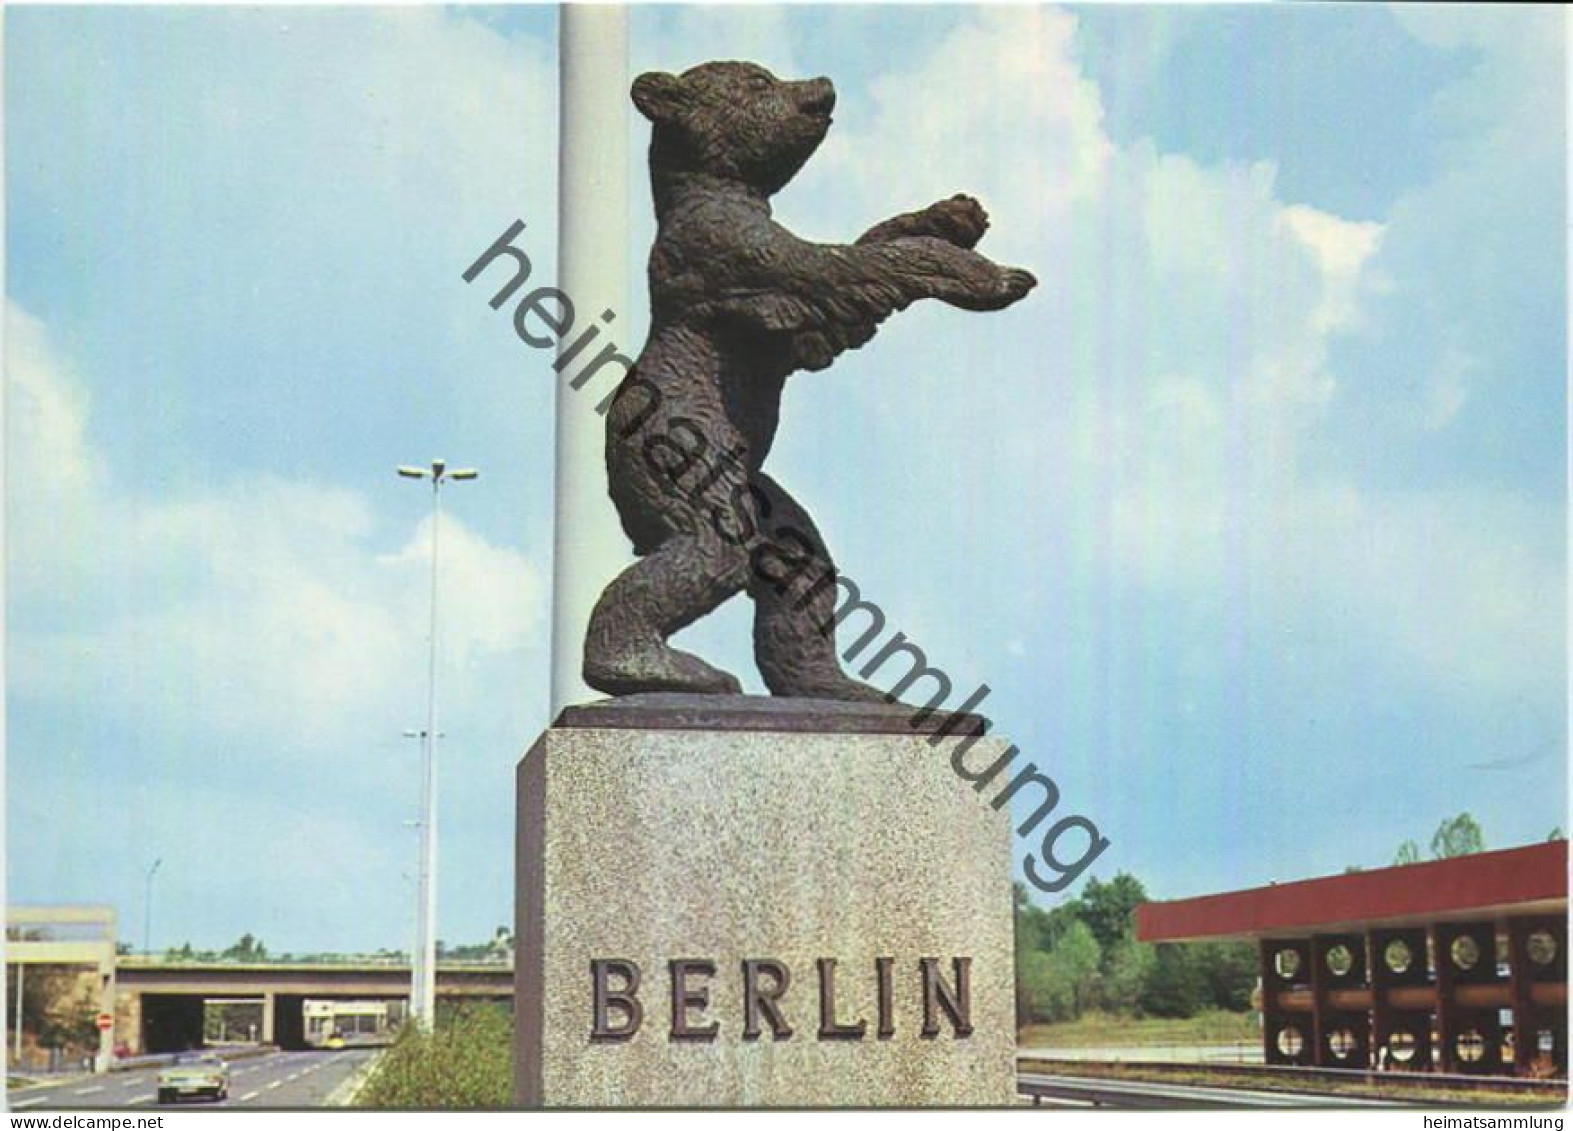 Berlin - Berliner Bär Am Grenzübergang Drei-Linden - AK Grossformat - Zehlendorf